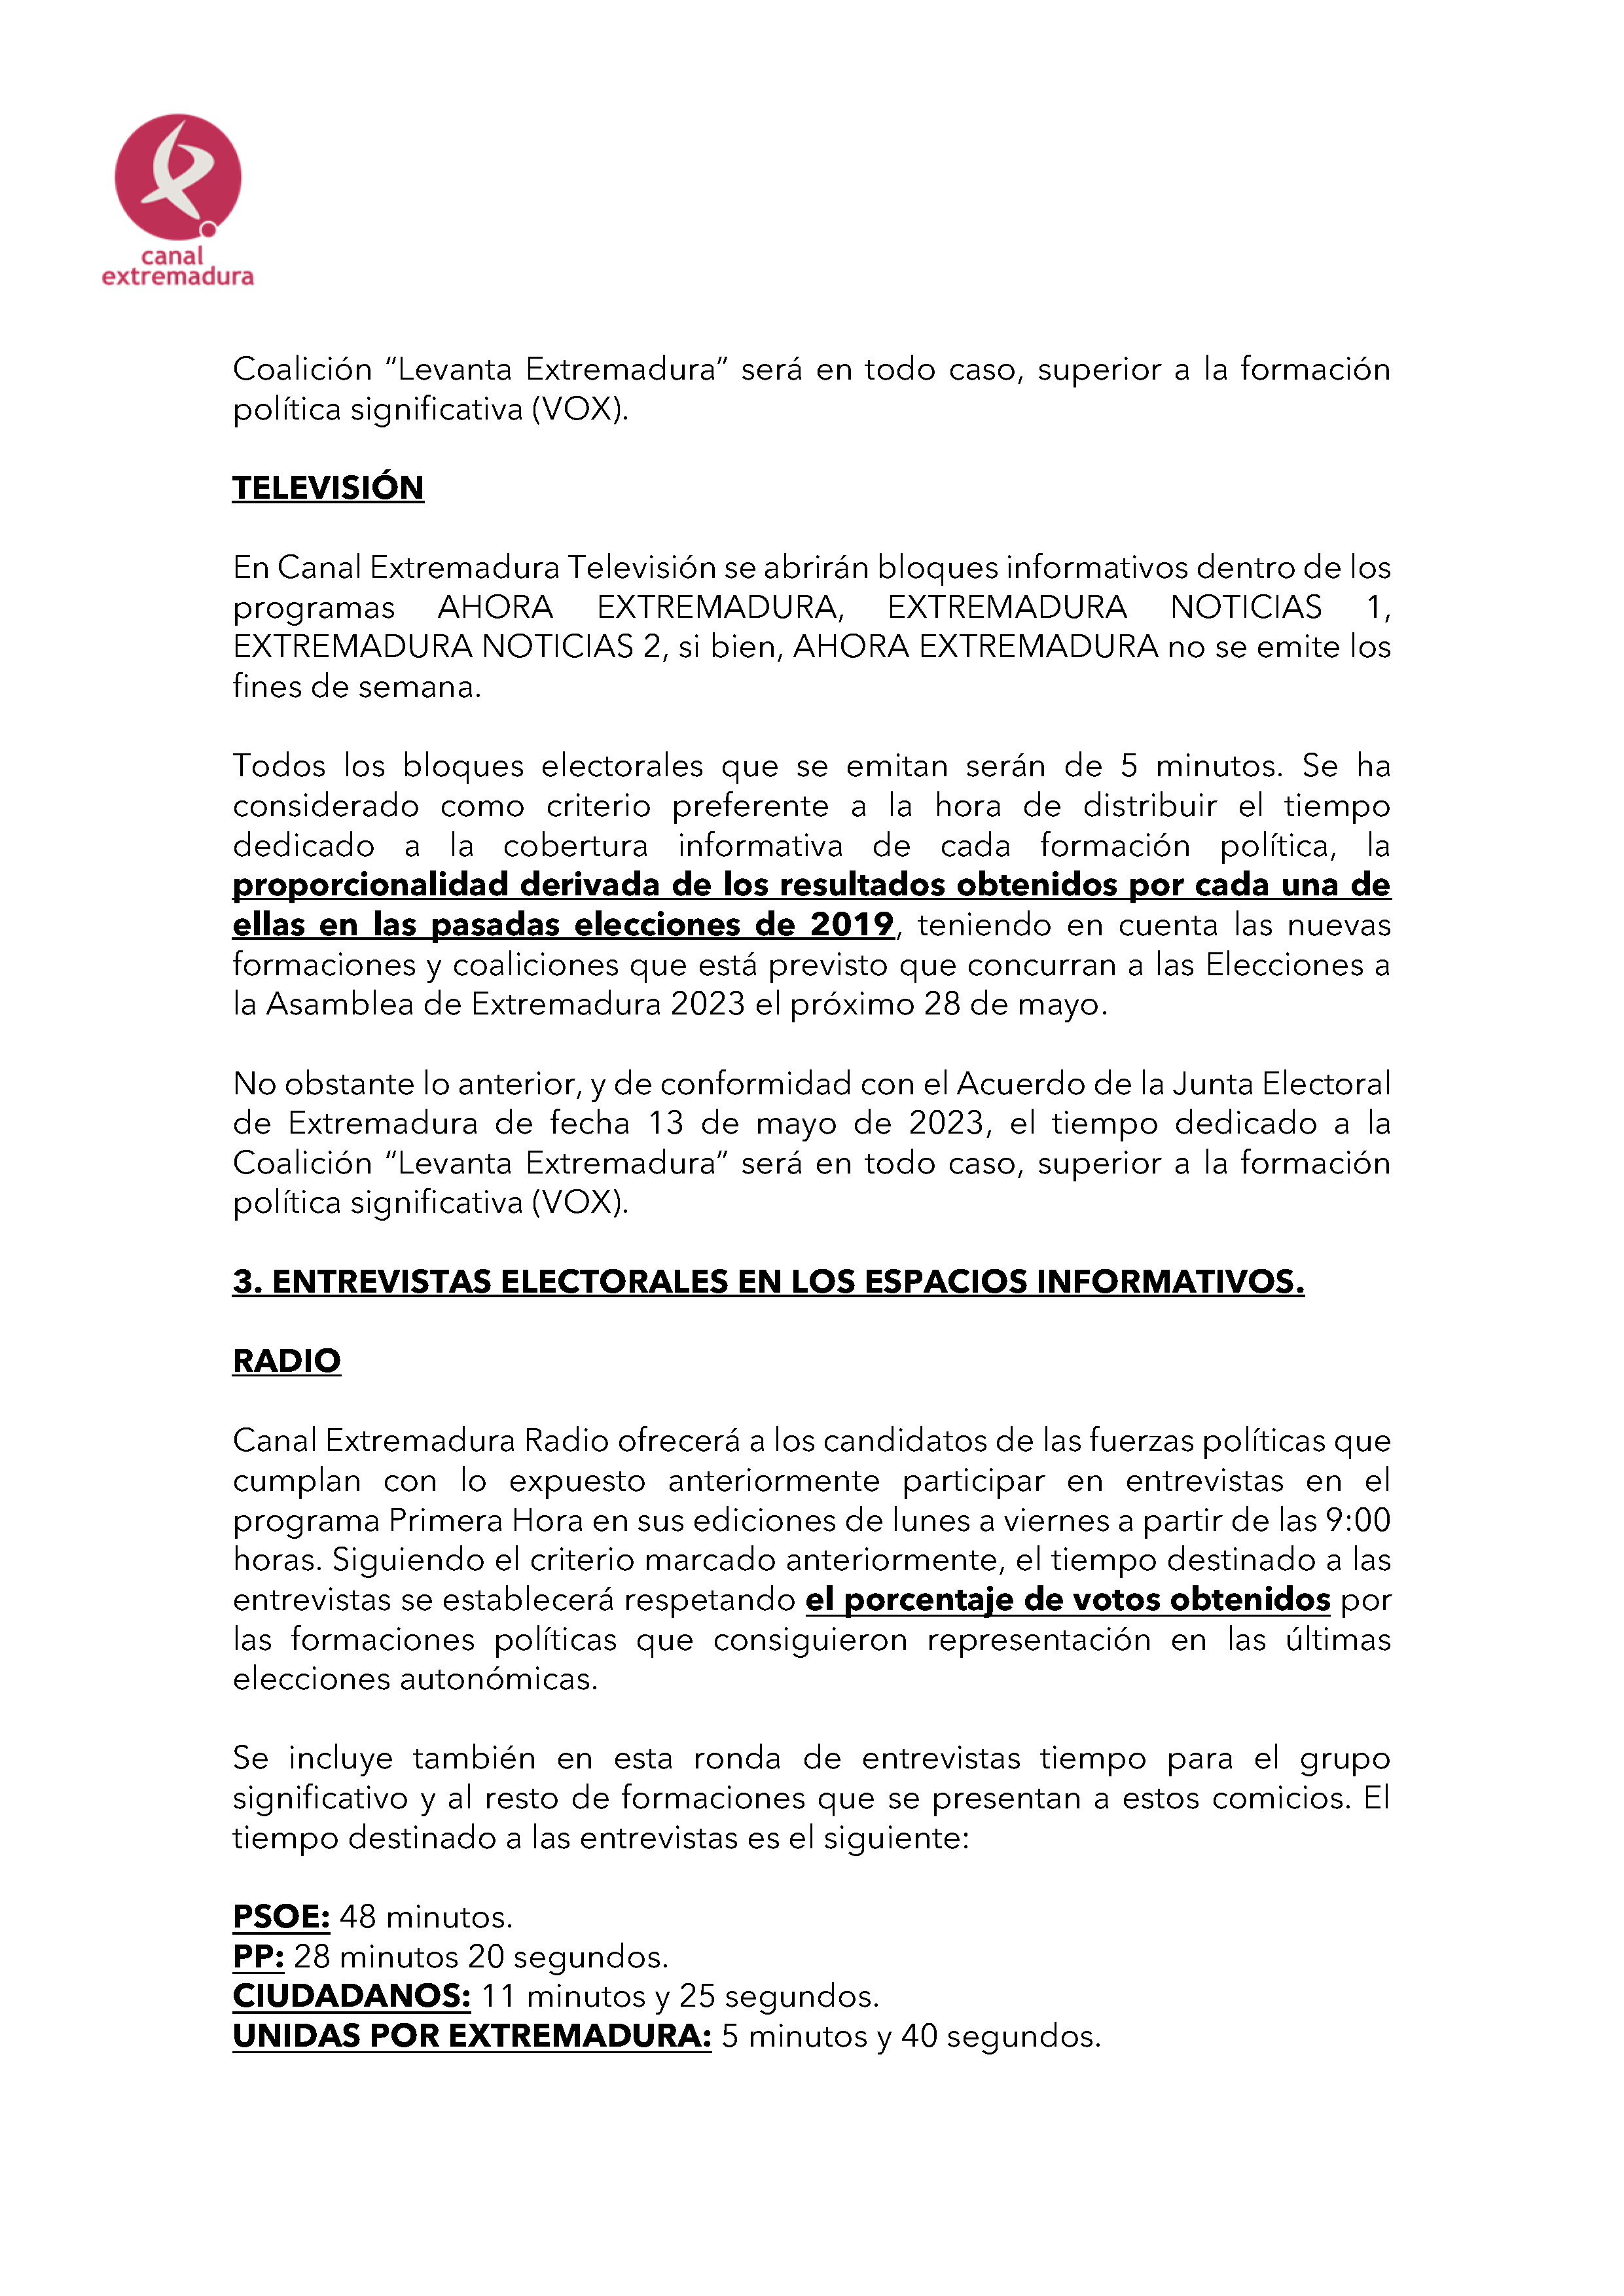 PLAN DE COBERTURA INFORMATIVA DE CANAL EXTREMADURA ELECCIONES AUTONÃ“MICAS 2023. Pag 6